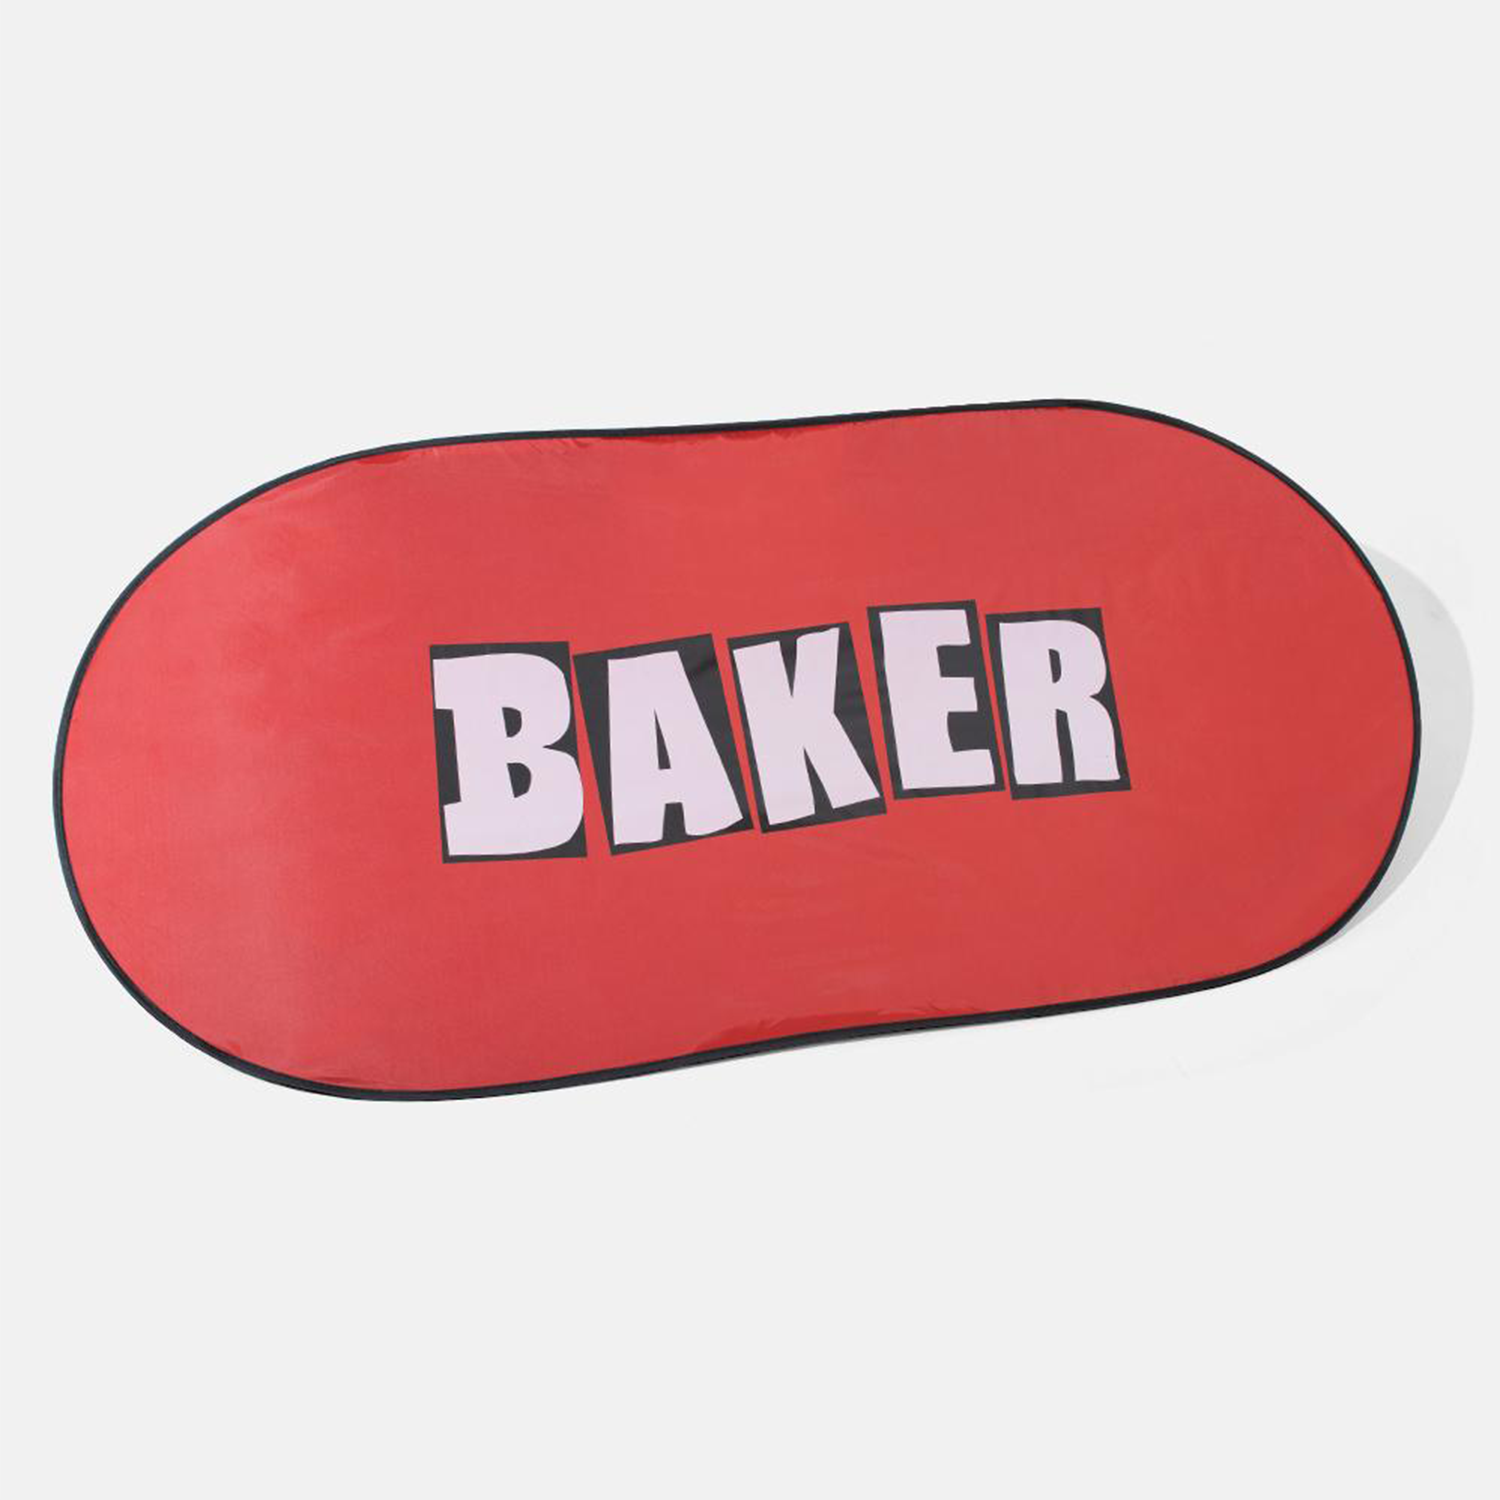 Tapasol de auto Baker